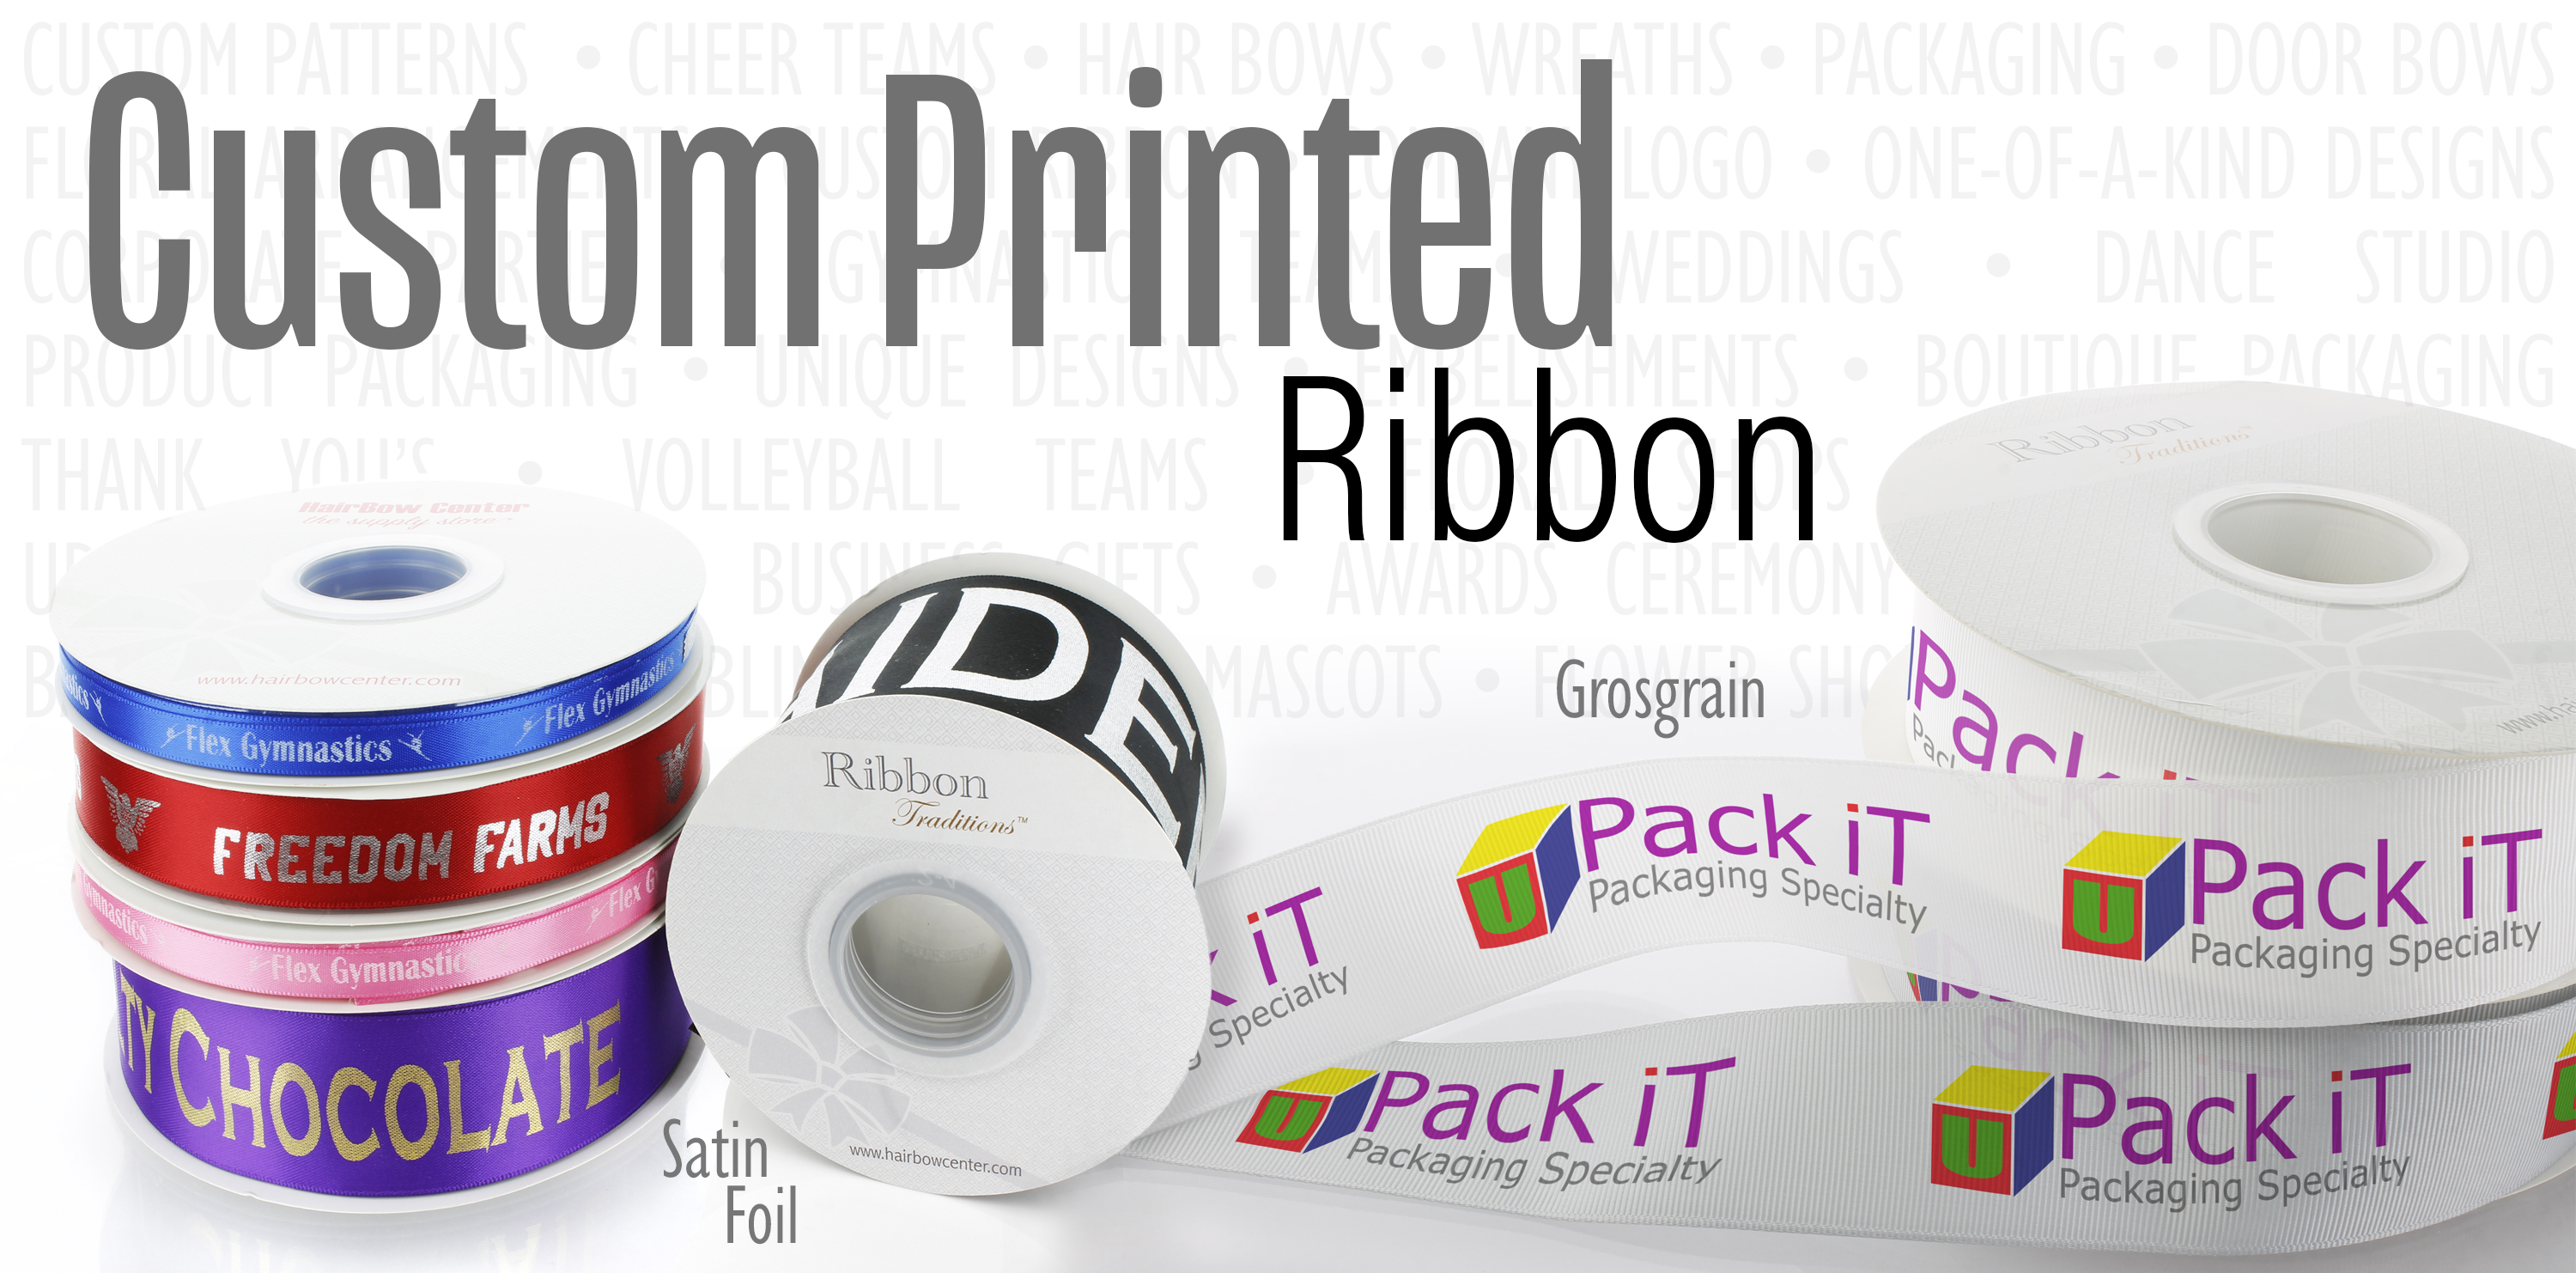 Custom Printed Ribbon